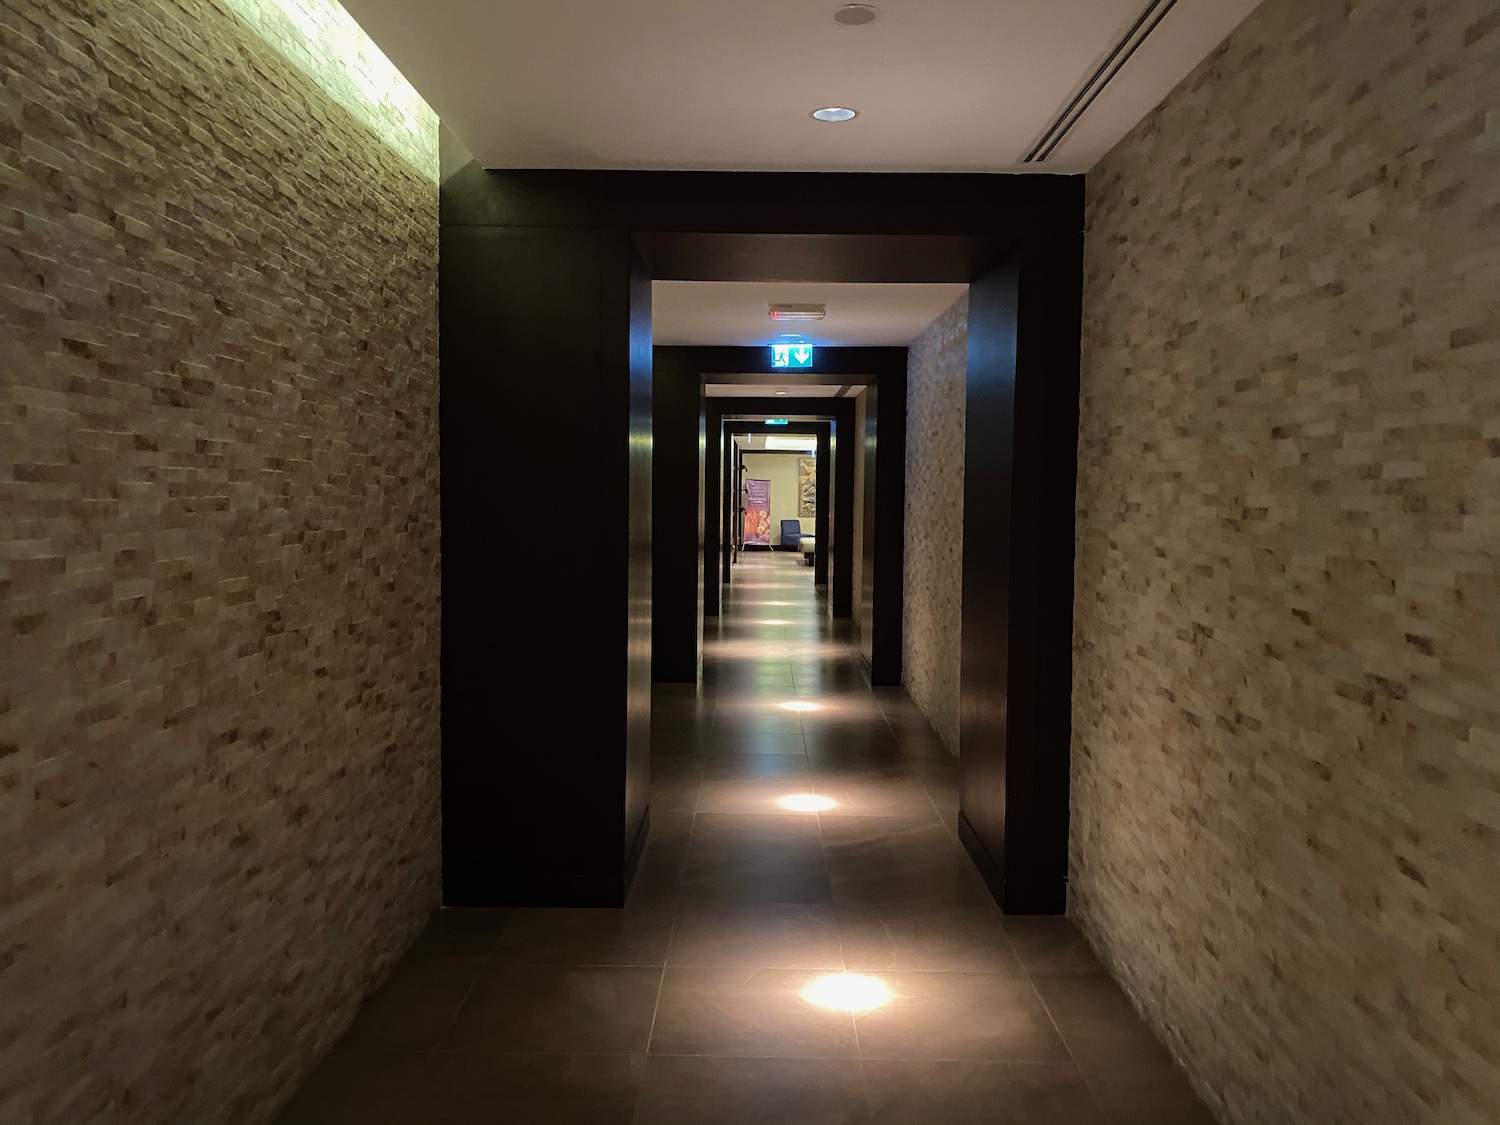 a hallway with lights on the floor